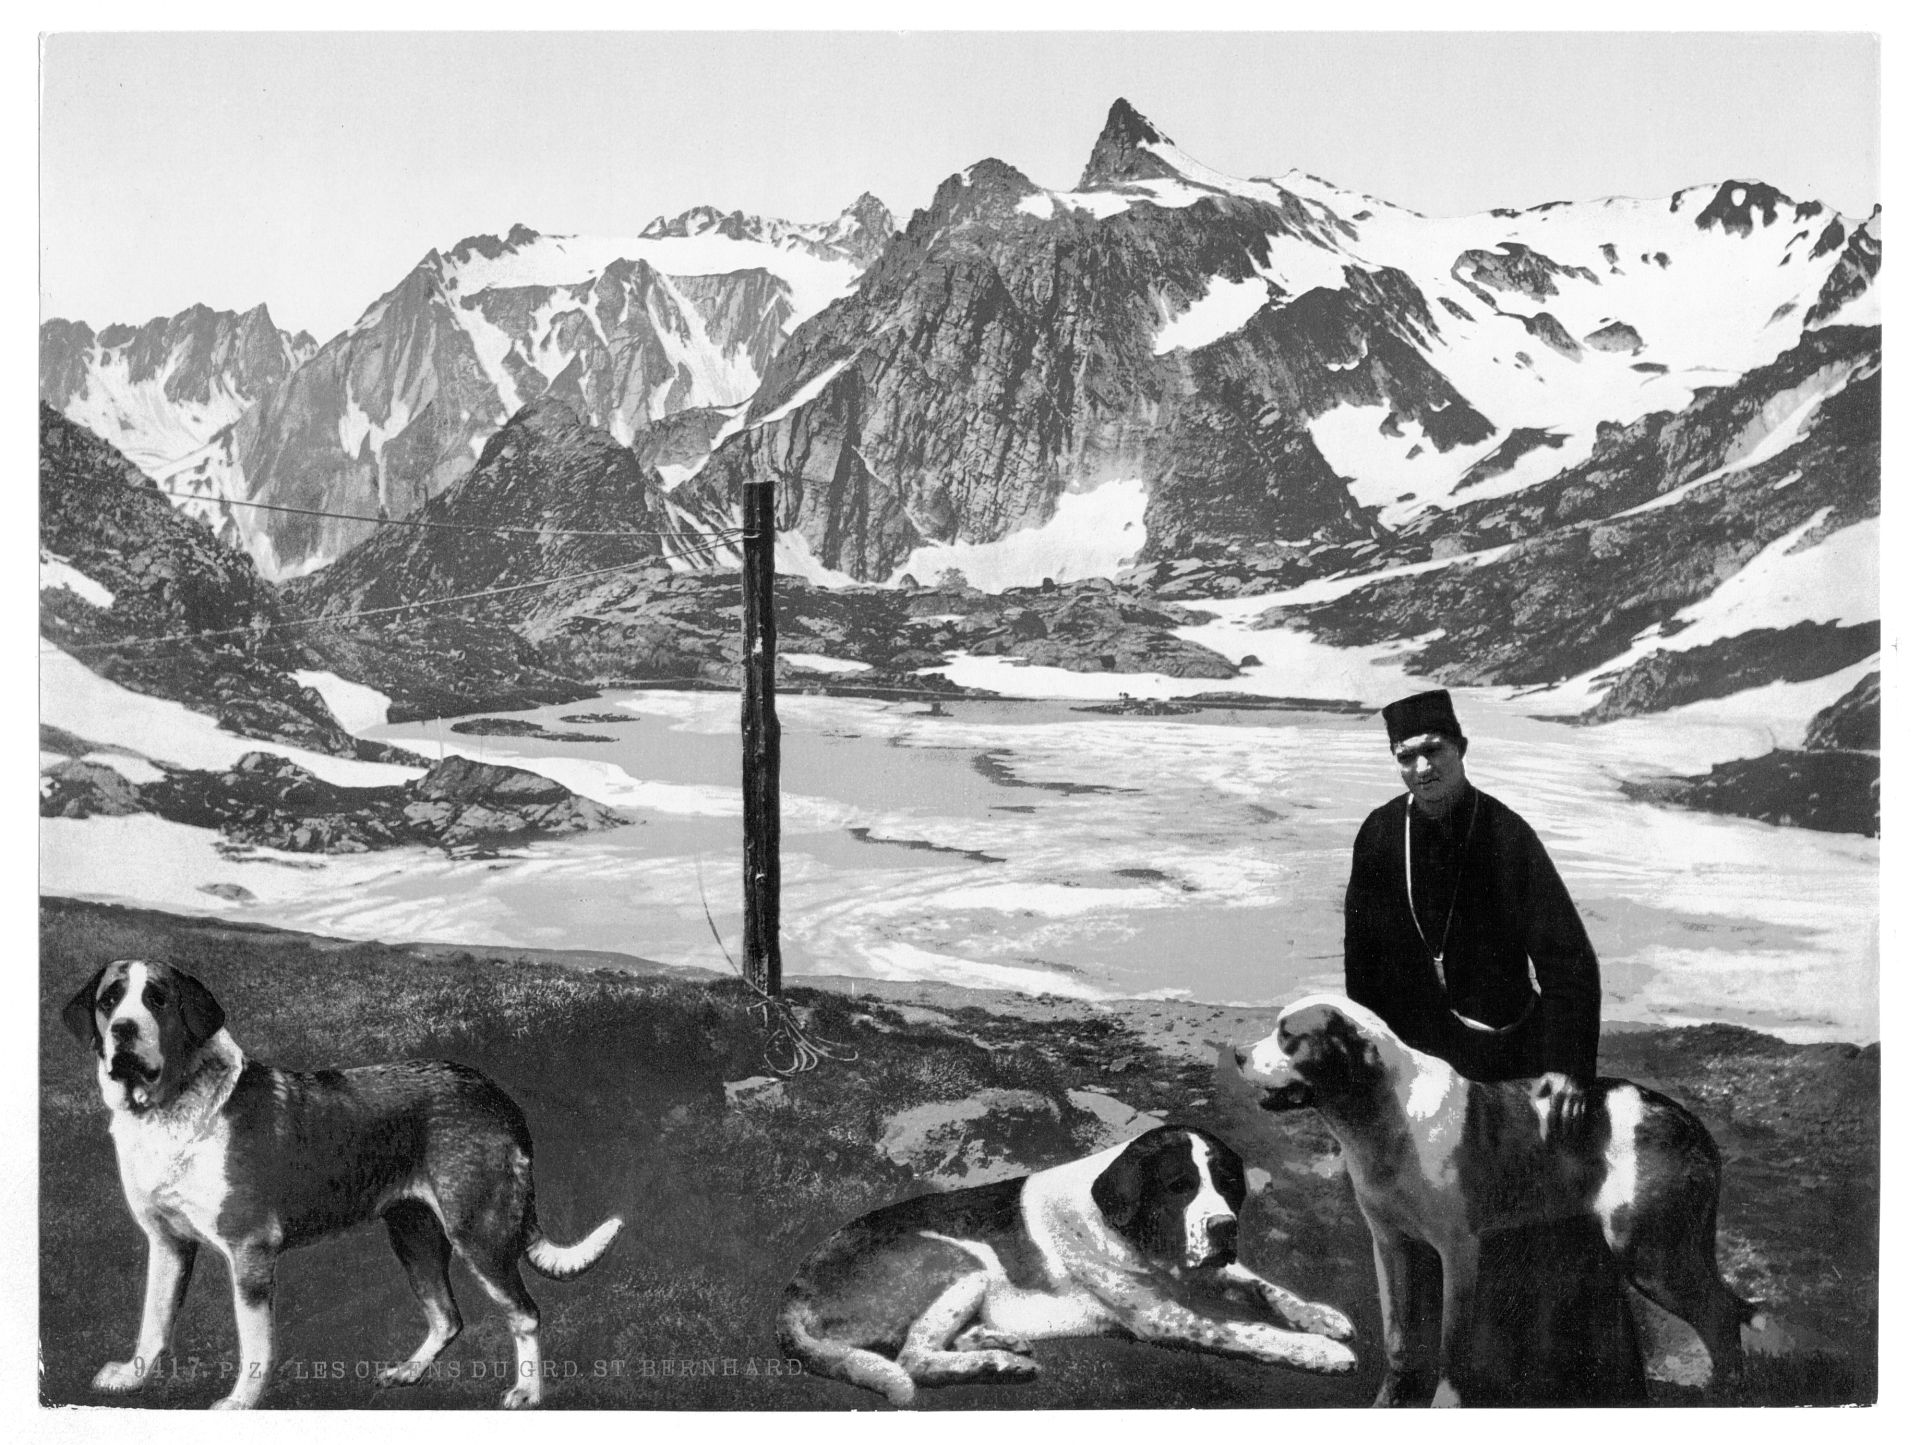 St. Bernard dogs, Valais, Alps of, Switzerland